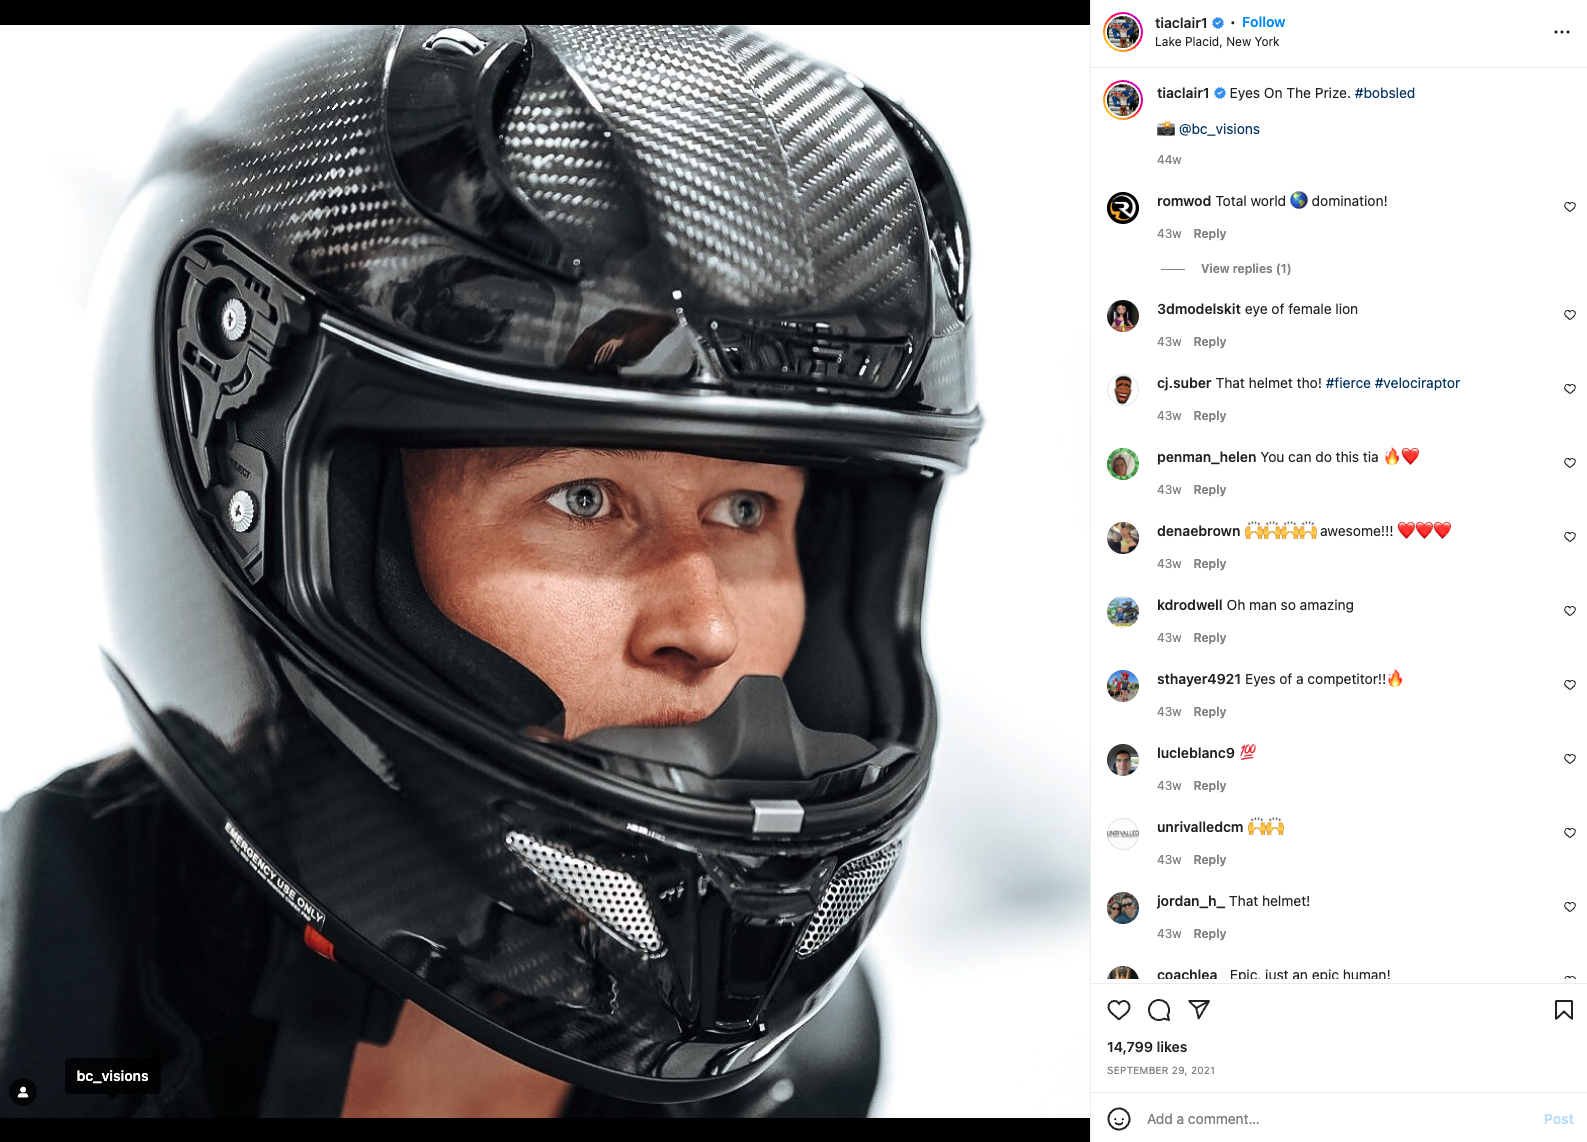 Tia-Clair Toomey wearing bobseld helmet, from Instagram